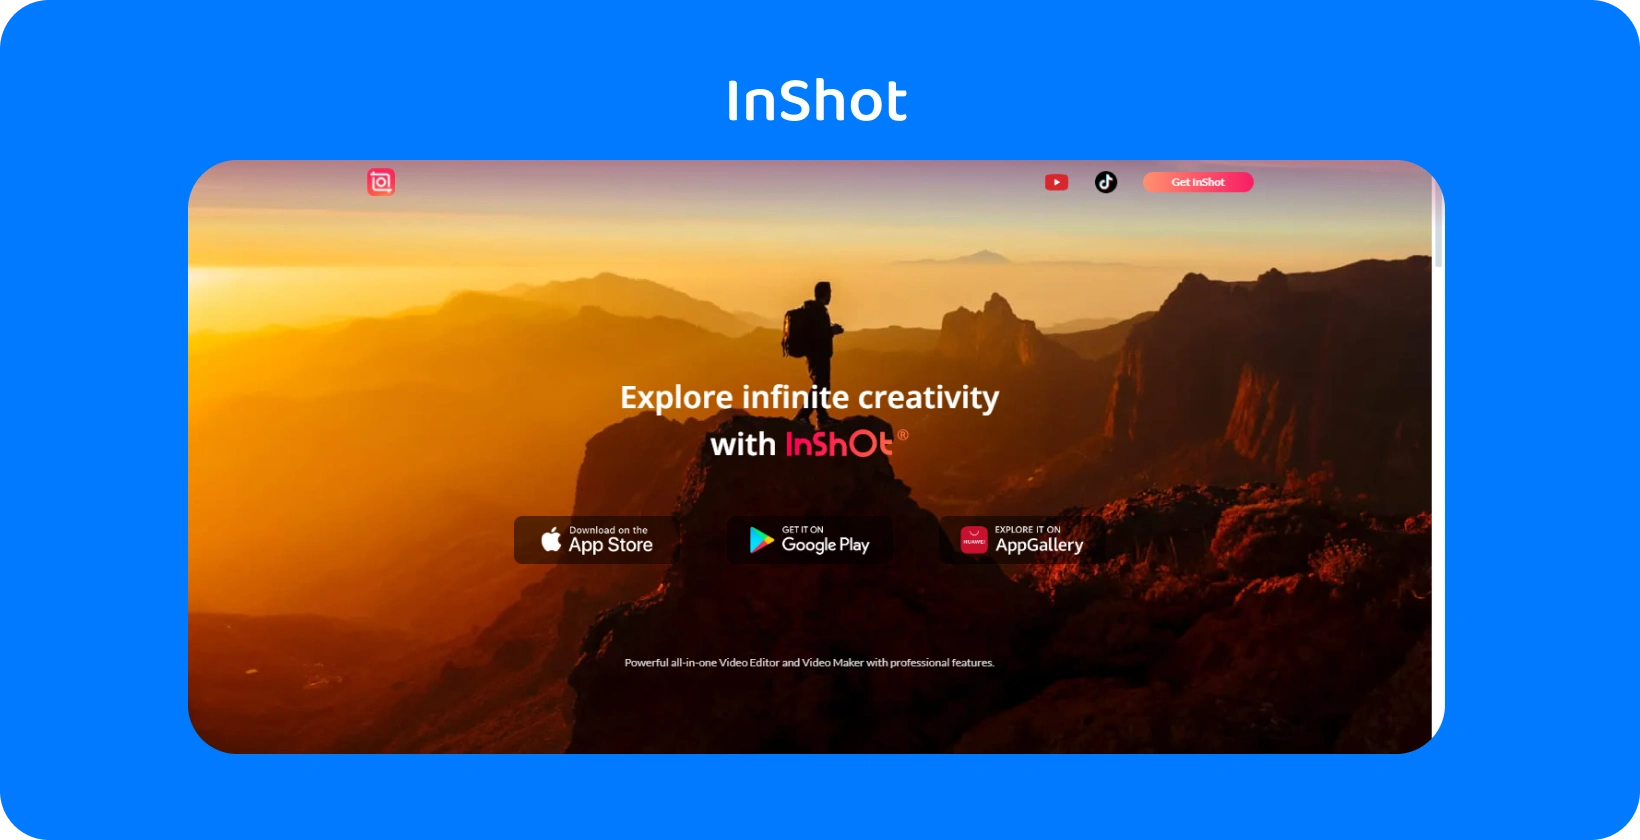 Iklan aplikasi InShot menampilkan pejalan kaki saat matahari terbenam, melambangkan janji aplikasi untuk mengeksplorasi kreativitas tanpa batas dalam pengeditan video.
